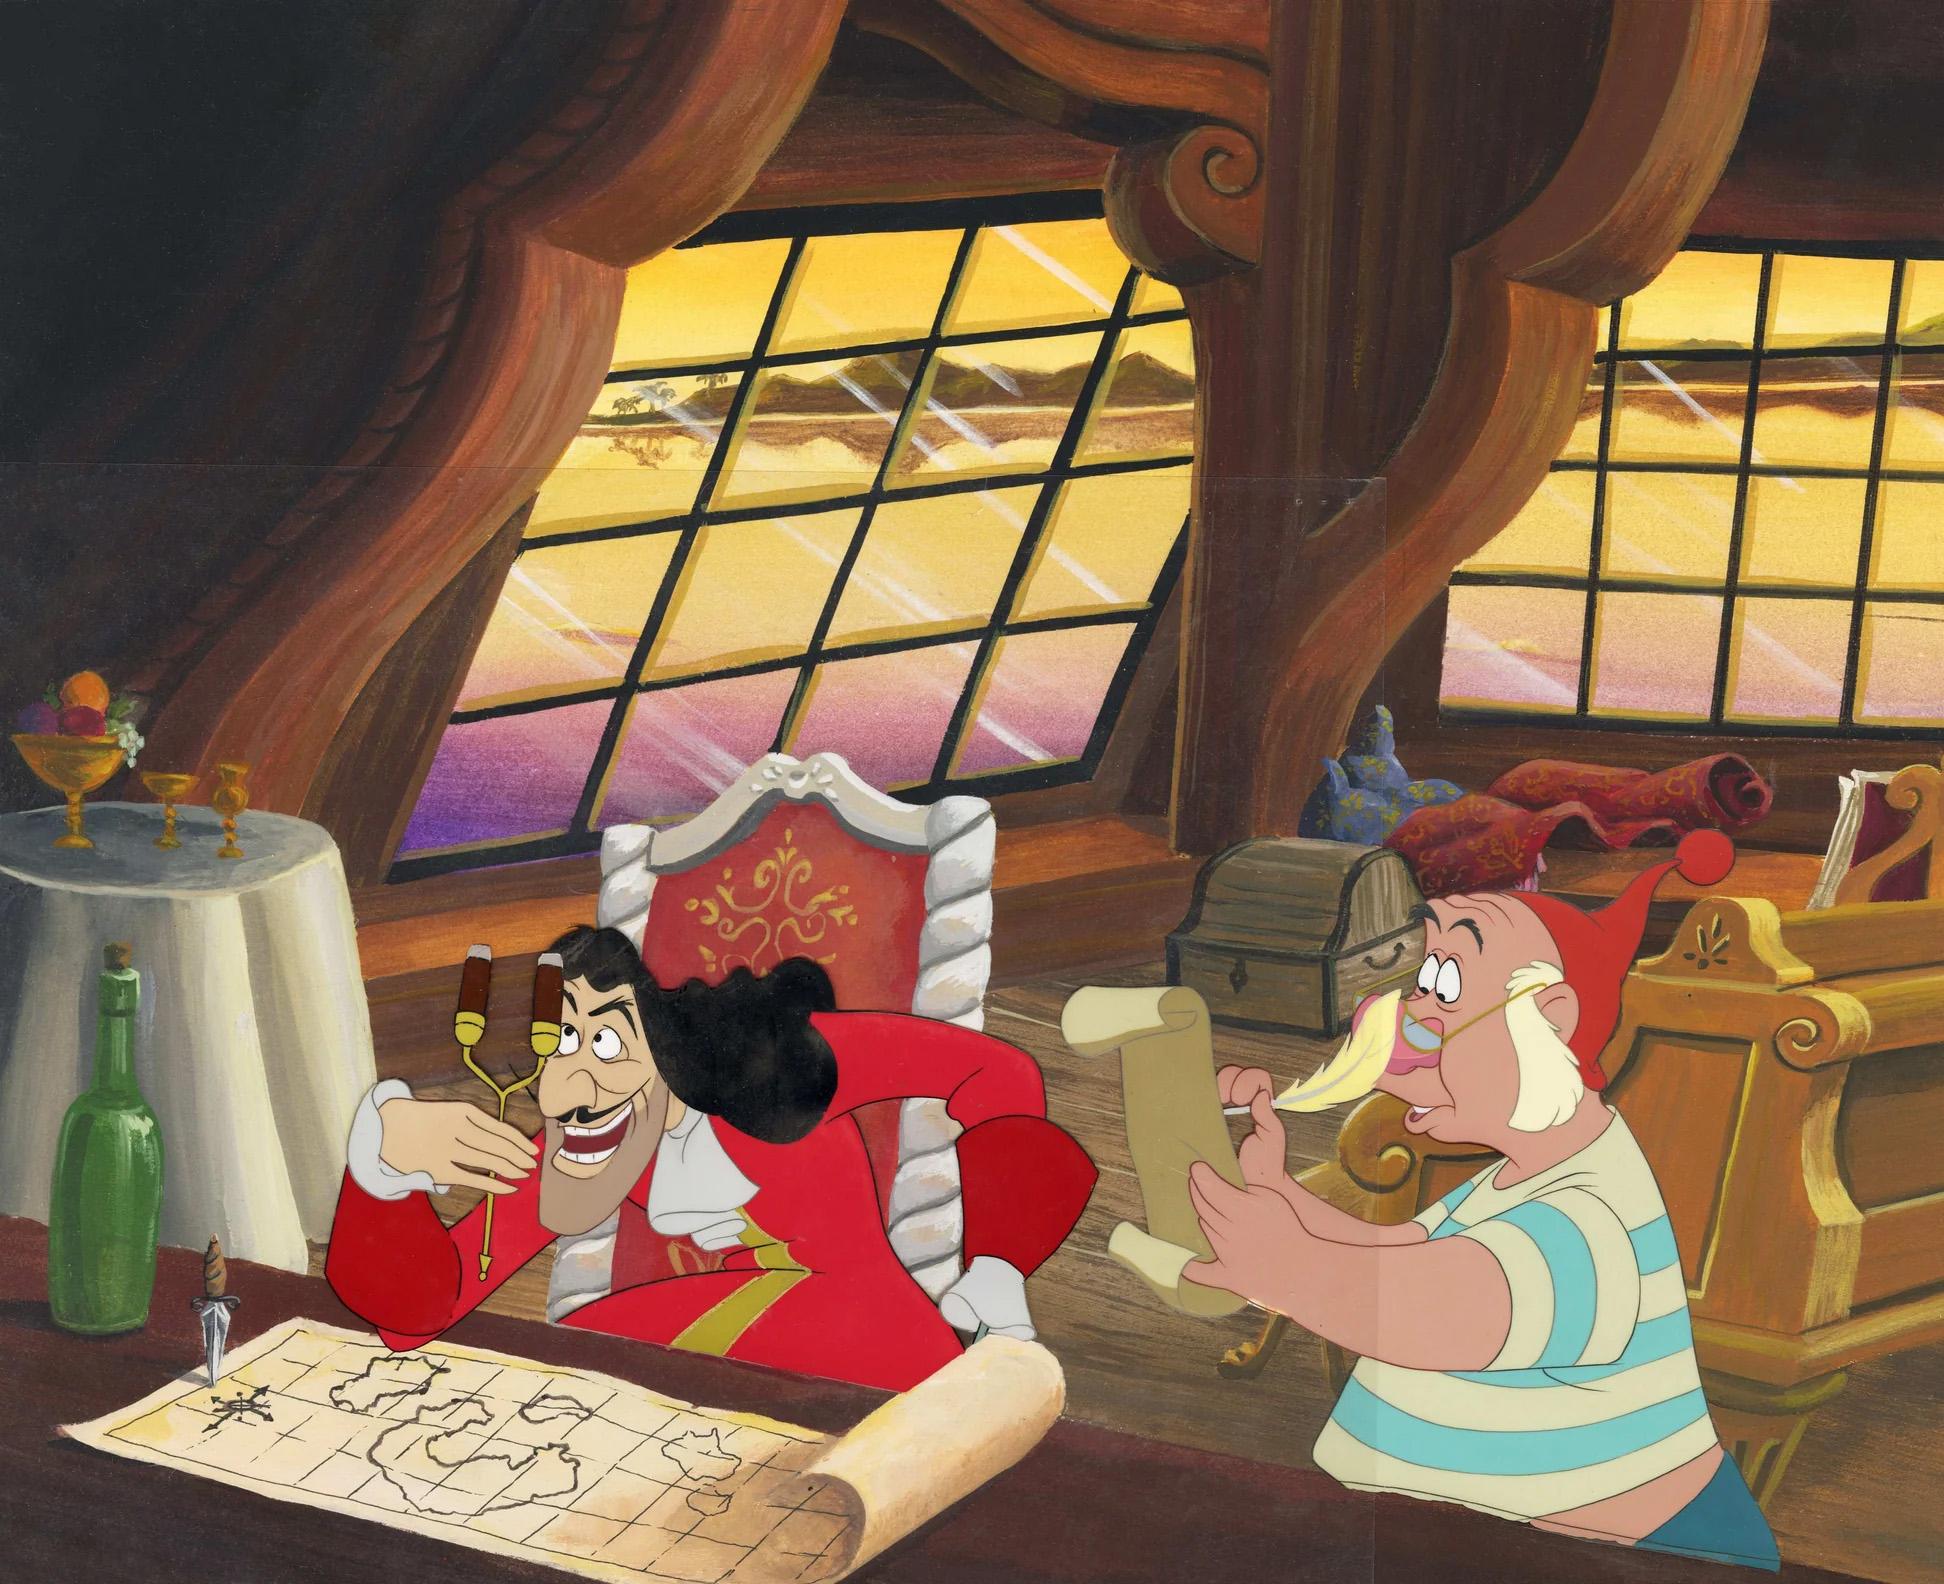 Peter Pan Original Production Cel: Hook and Smee - Art by Walt Disney Studio Artists